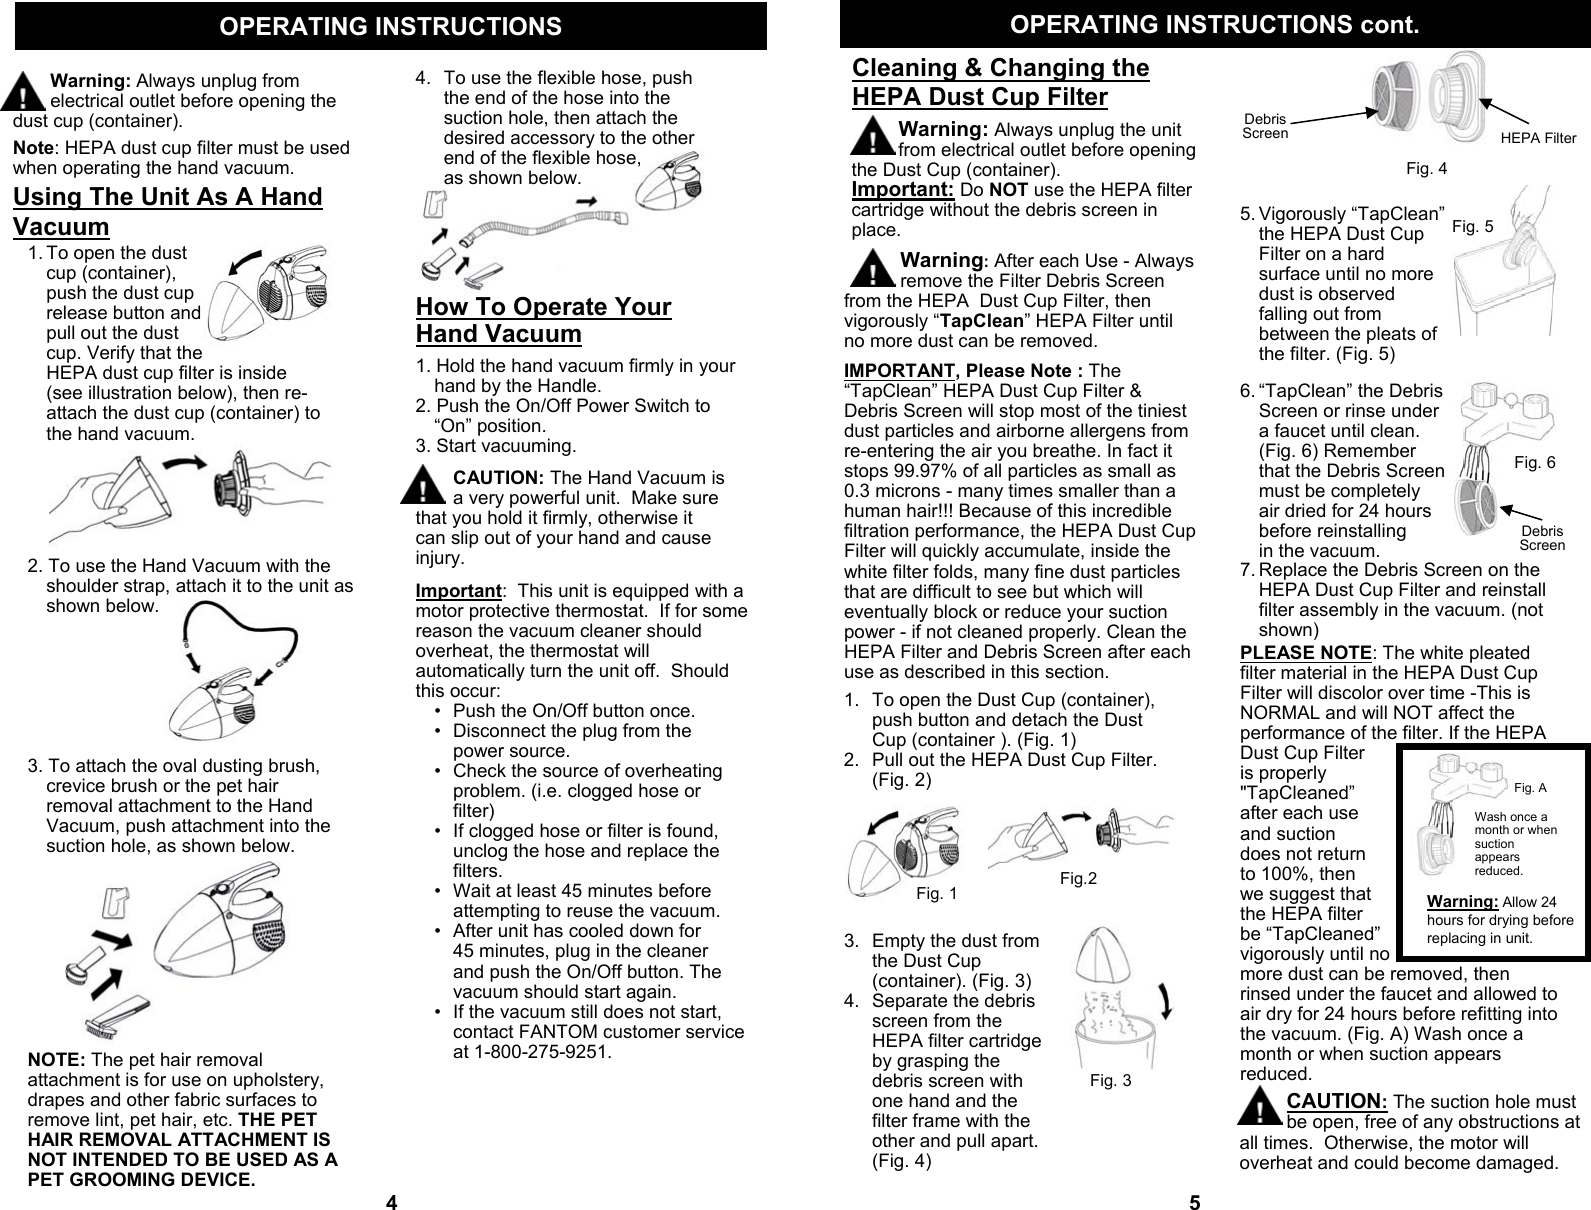 Fantom Vacuum Fm405 Users Manual 1